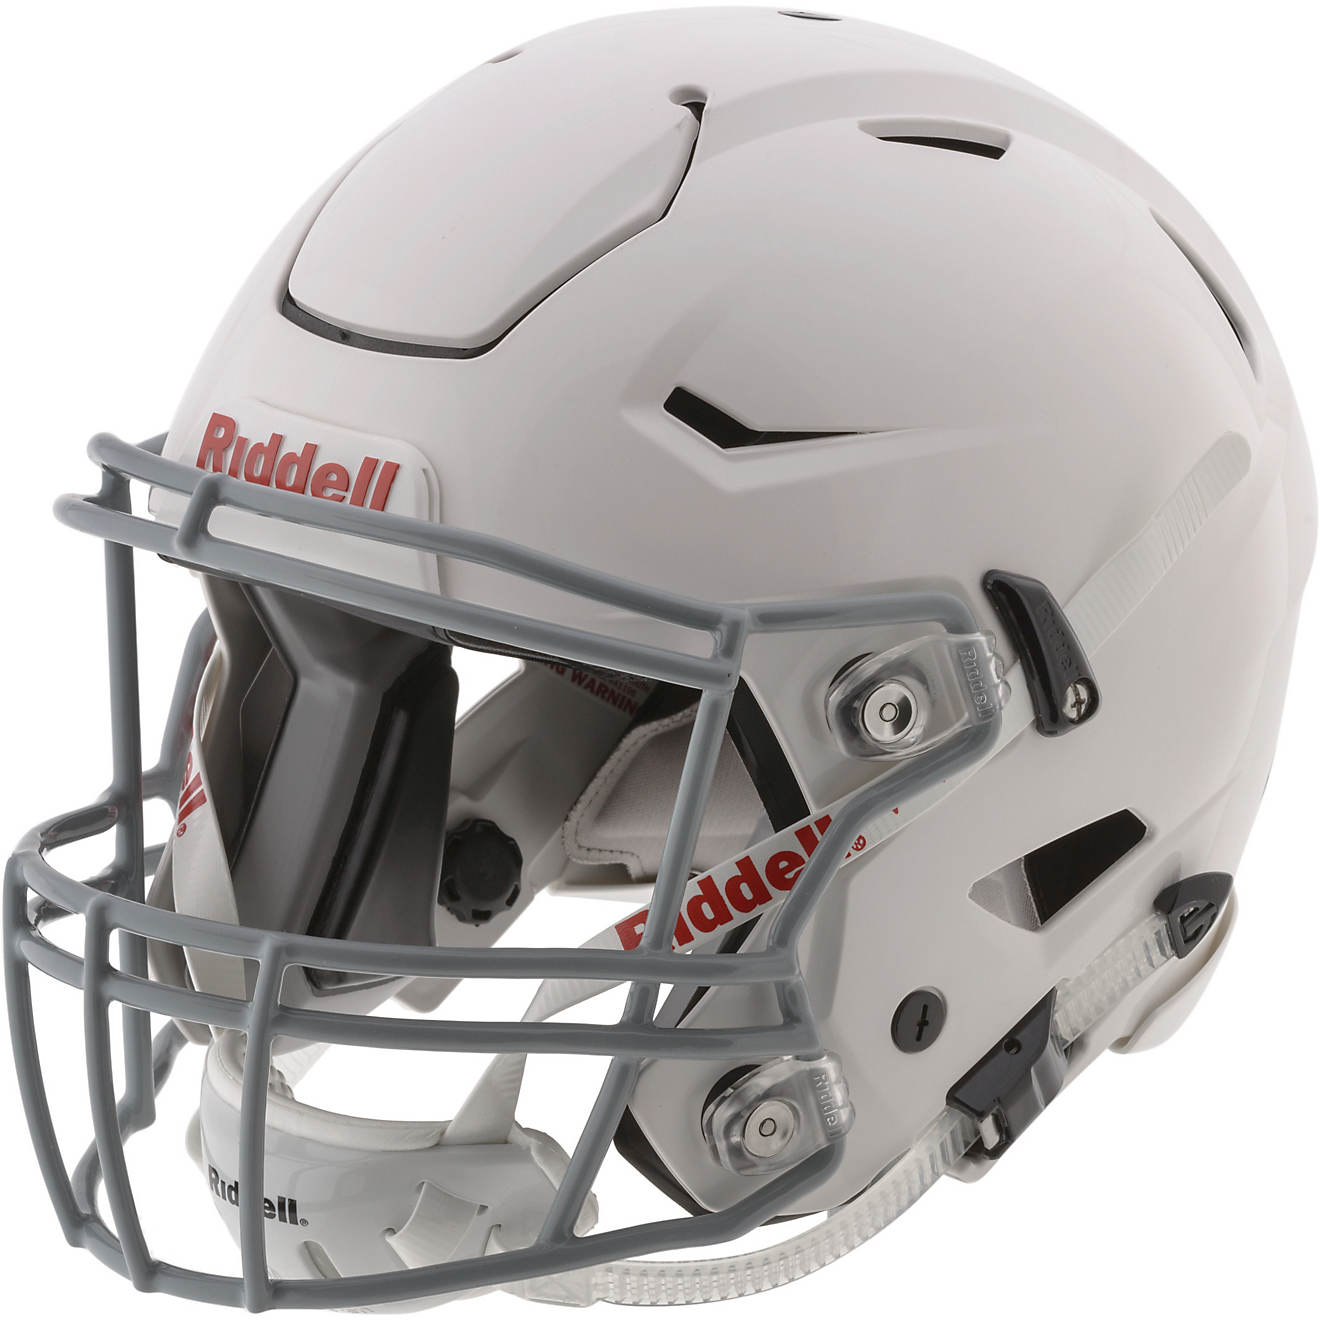 Size Riddell Speed Youth Football Helmet White 